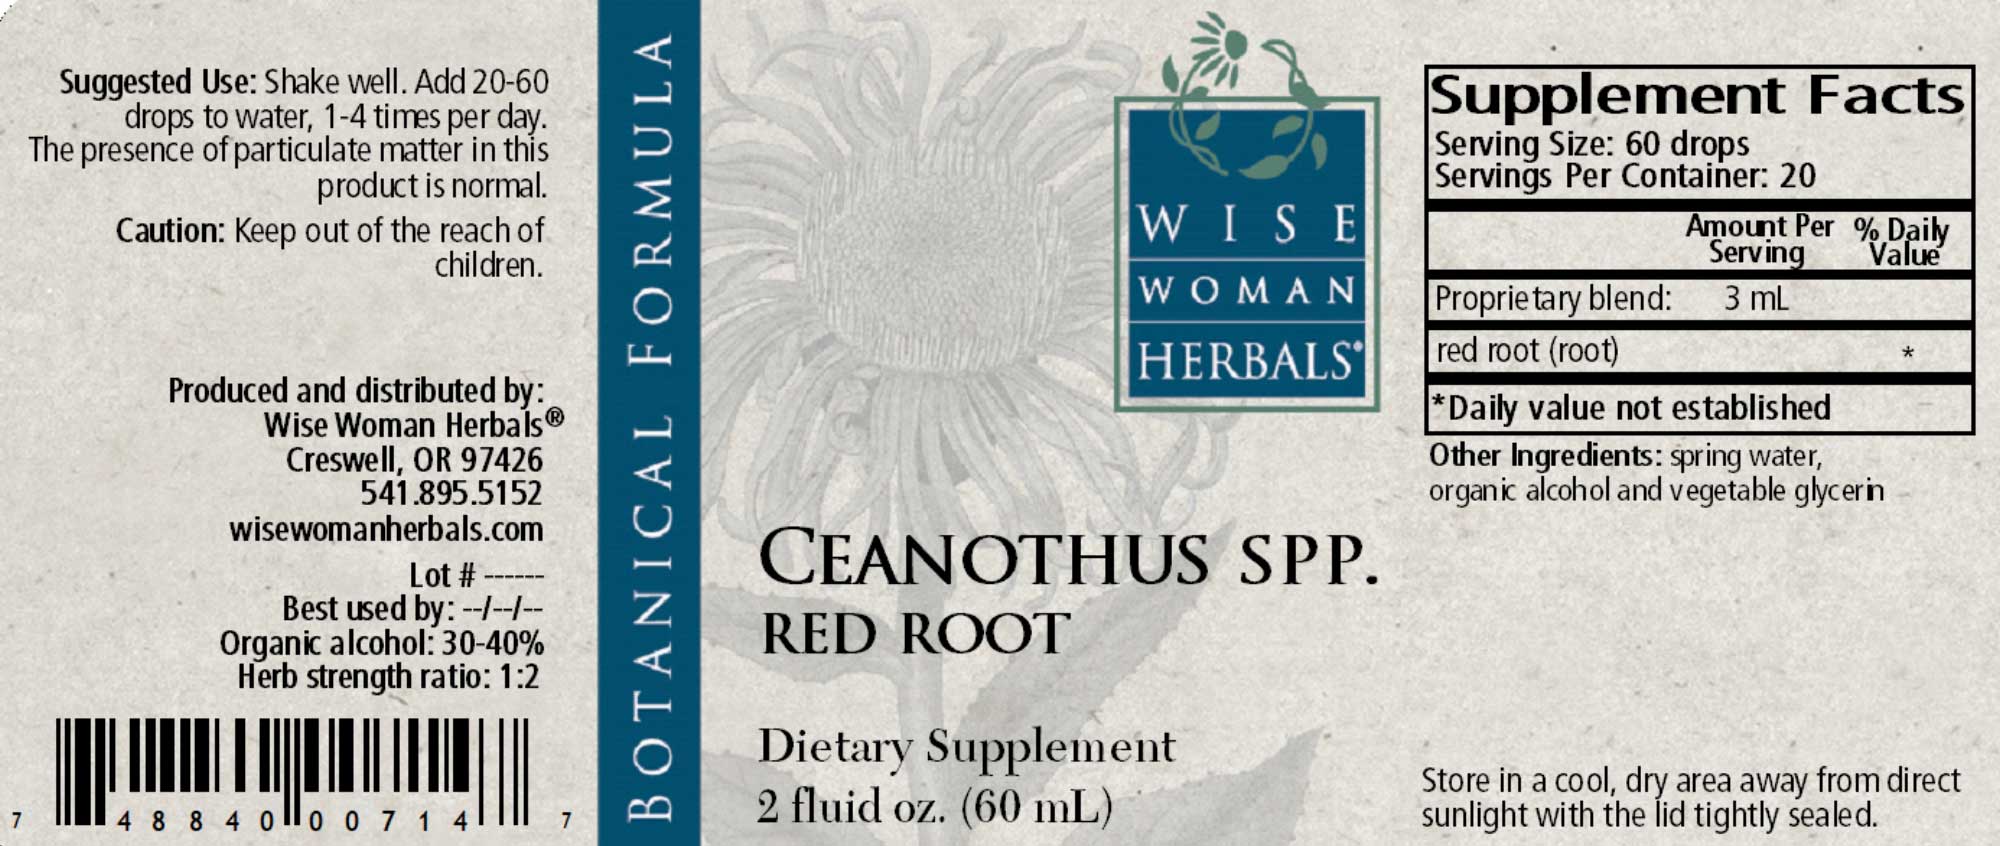 Wise Woman Herbals Ceanothus SPP Red Root Label